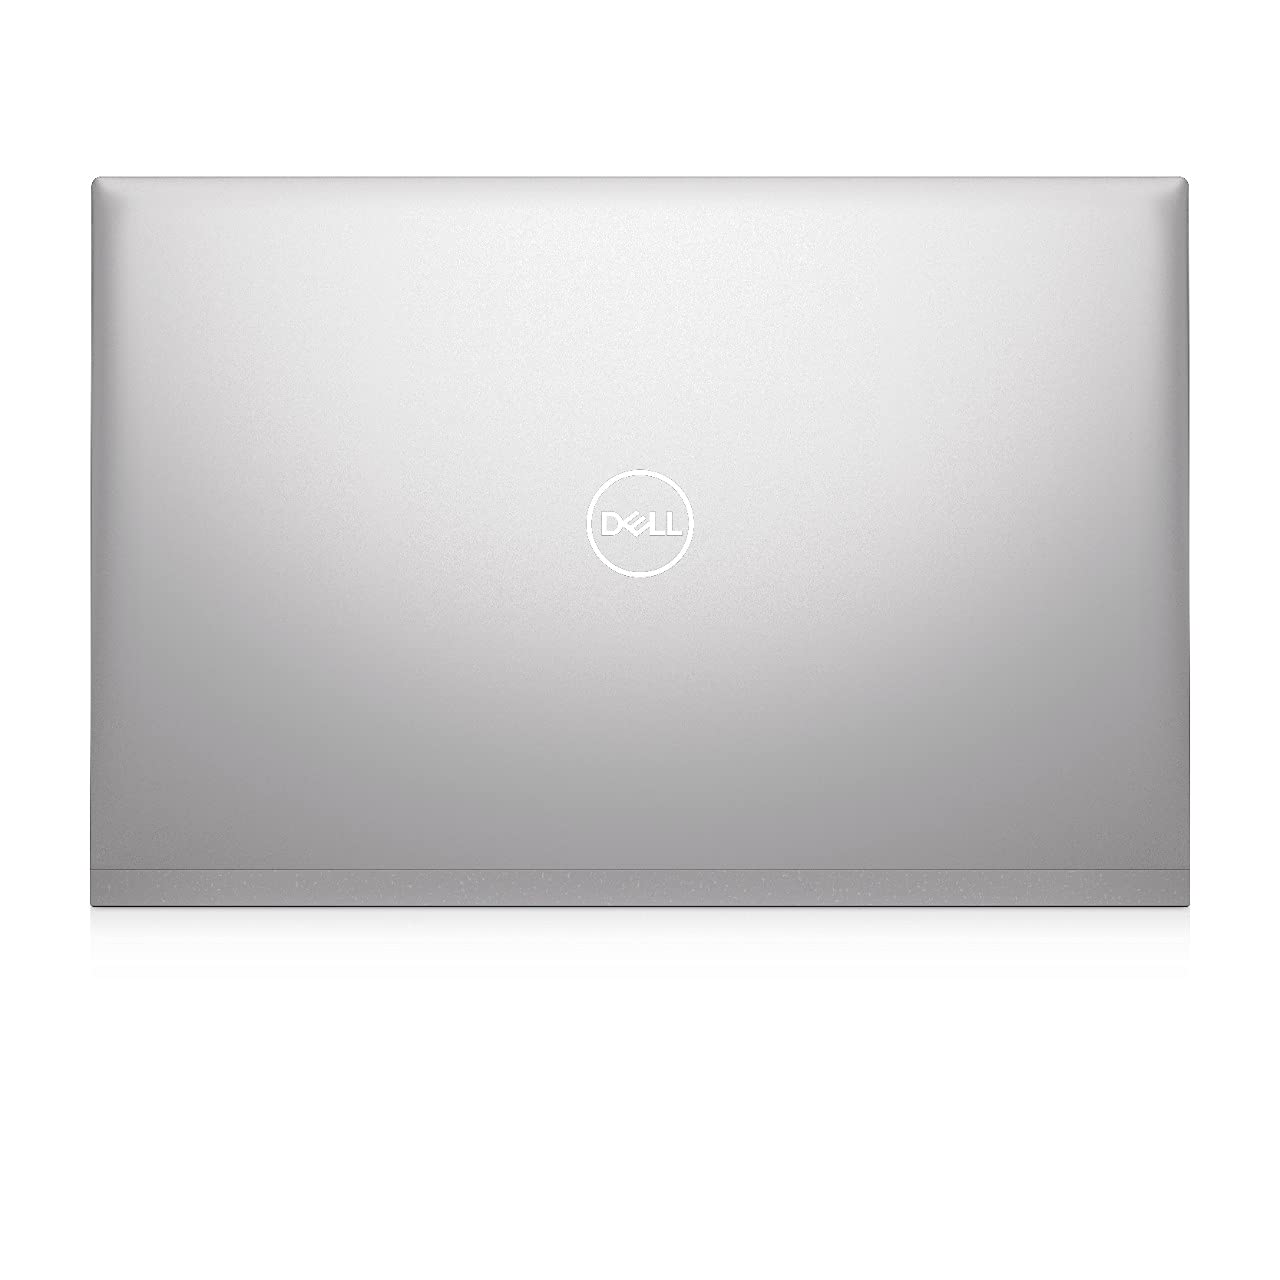 Dell Laptop Inspiron 5418, Core i5, 16GB Ram, Iris(R) Xe Graphics, 512 SSD